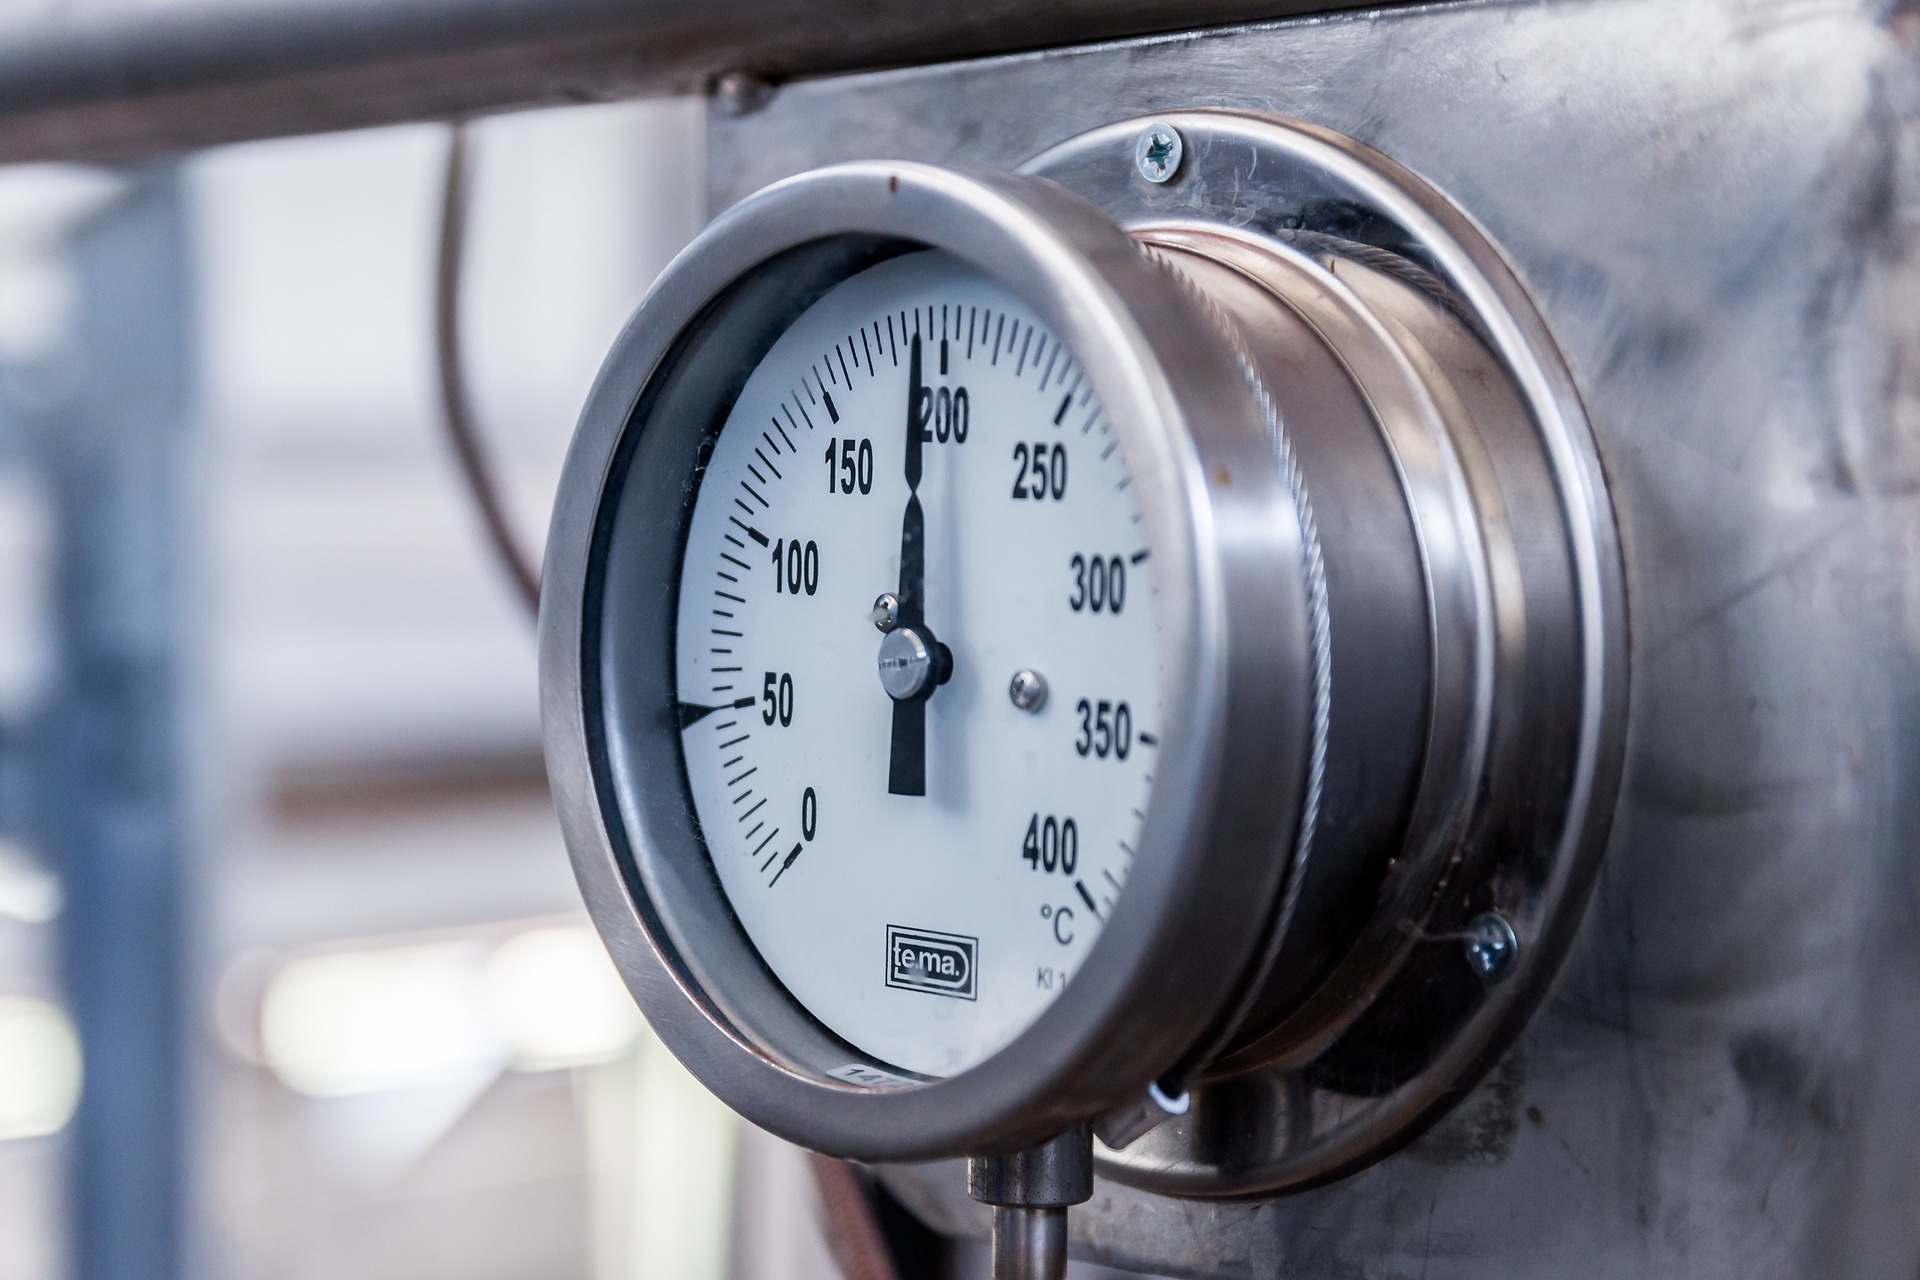 Pressure gauge on a gas boiler